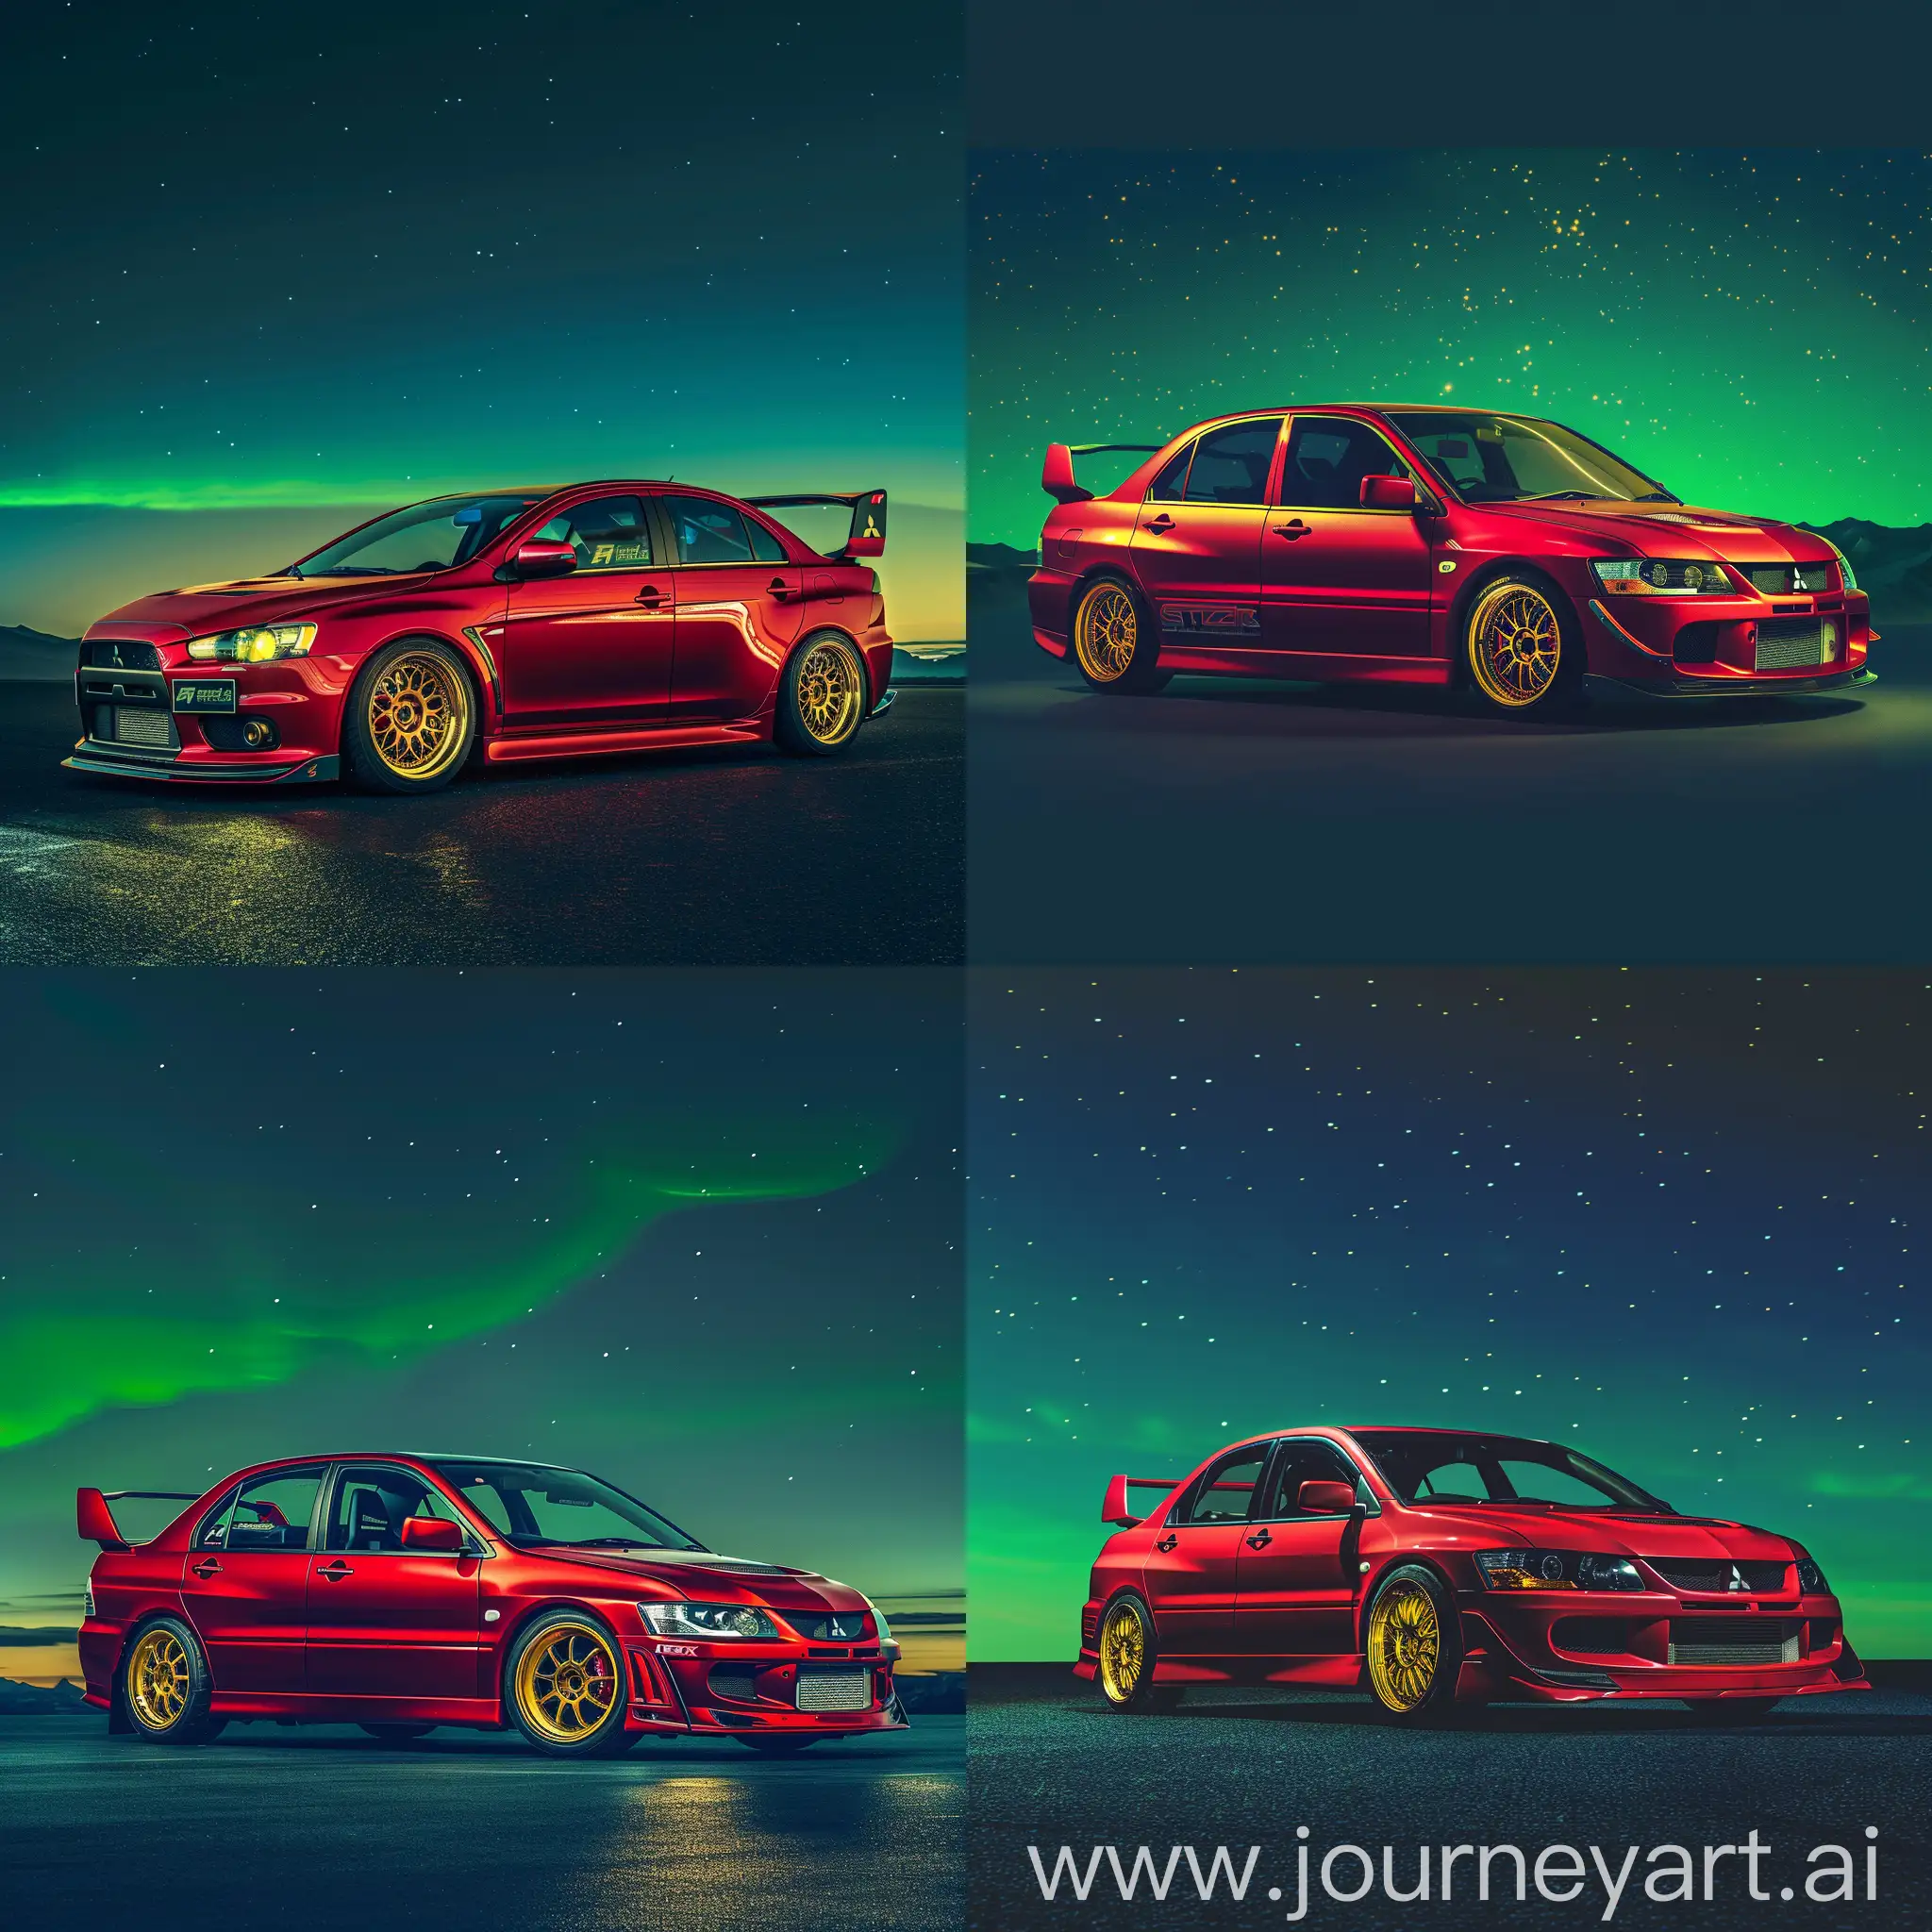 PinterestWorthy-Mitsubishi-Lancer-Evo-Red-Car-with-Golden-Rims-on-Dark-Blue-Background